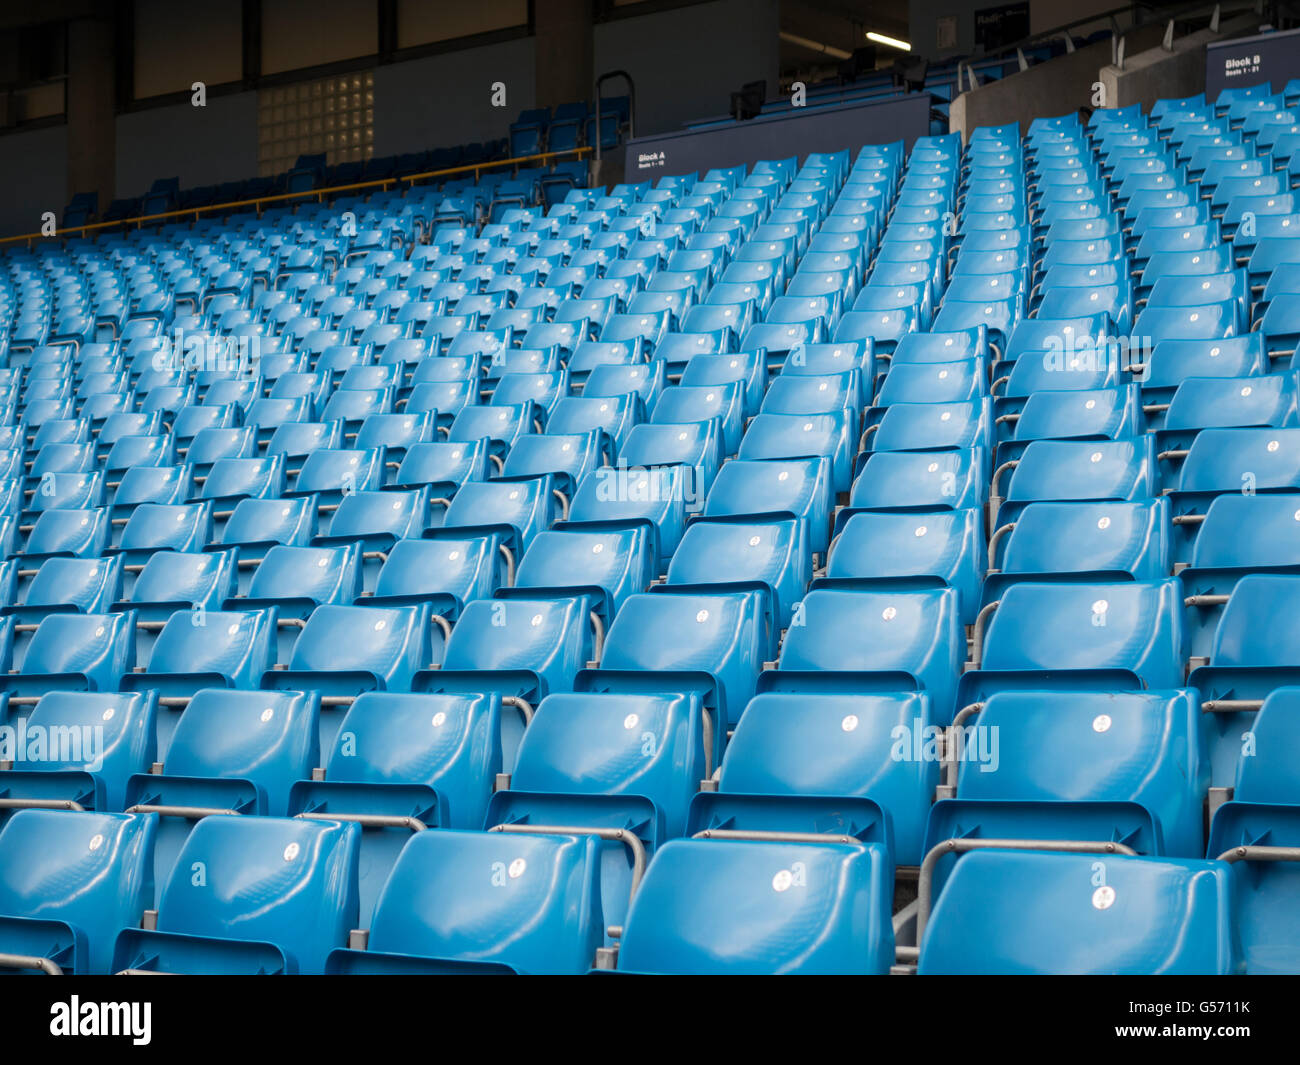 Seats inside Etihad Stadium Manchester CIty Football Club UK Stock Photo -  Alamy